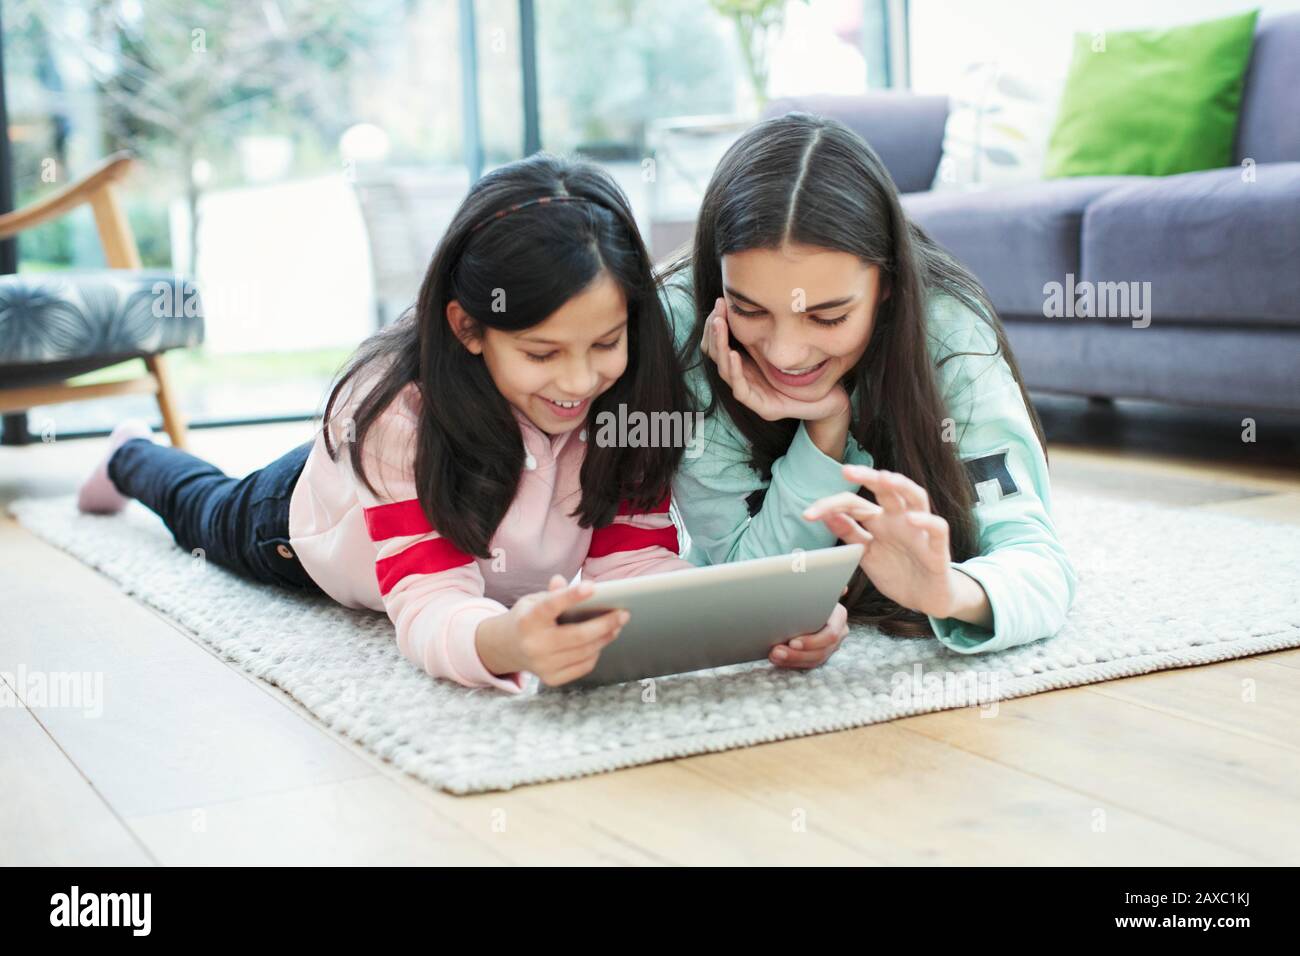 Smiling sisters using digital tablet on living room floor Stock Photo